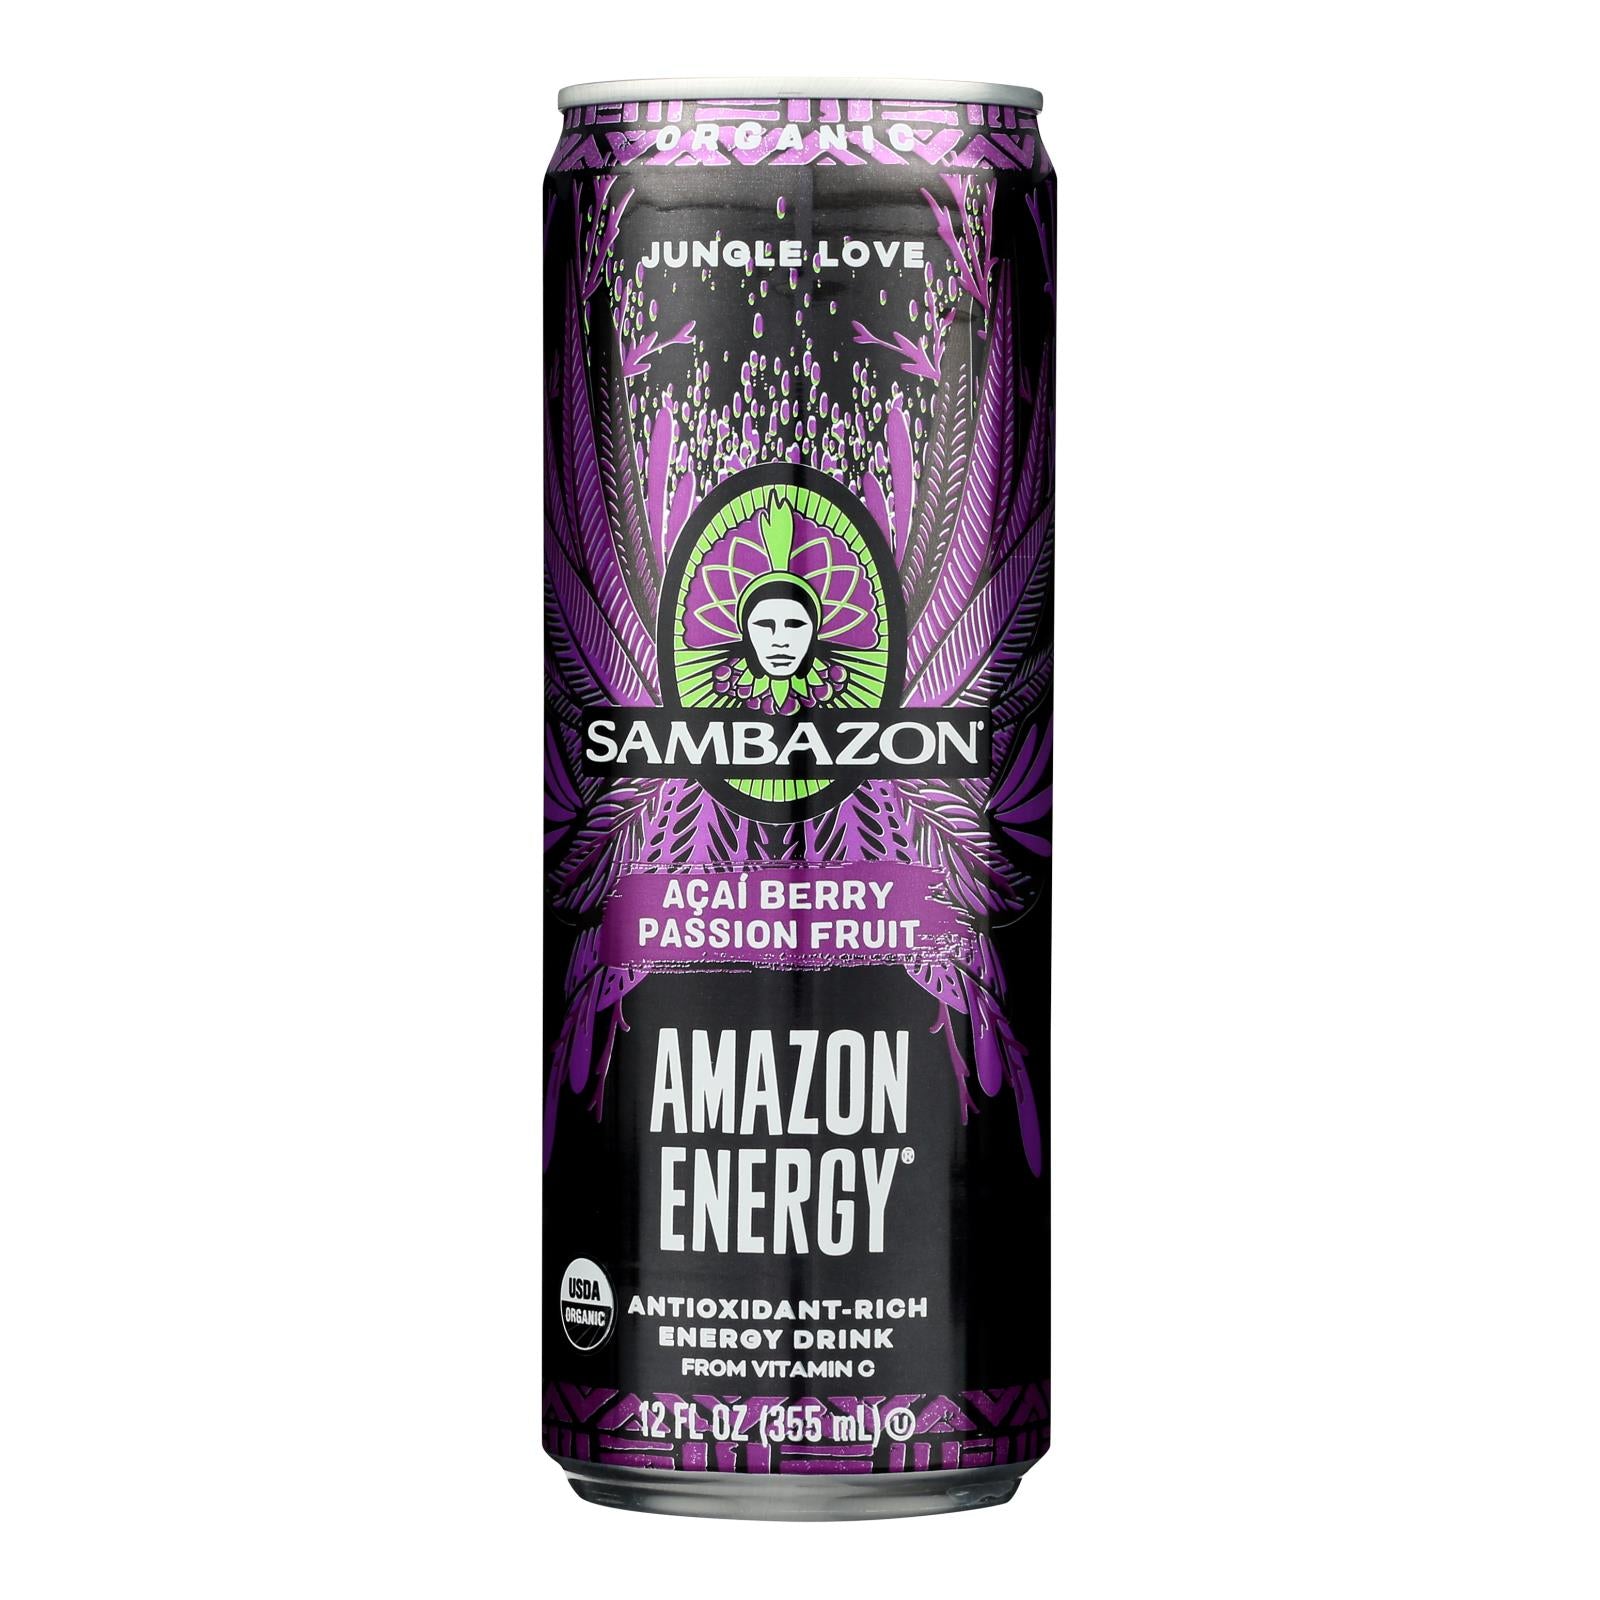 Sambazon Organic Amazon Energy Drink - Jungle Love - Case Of 12 - 12 Fl Oz